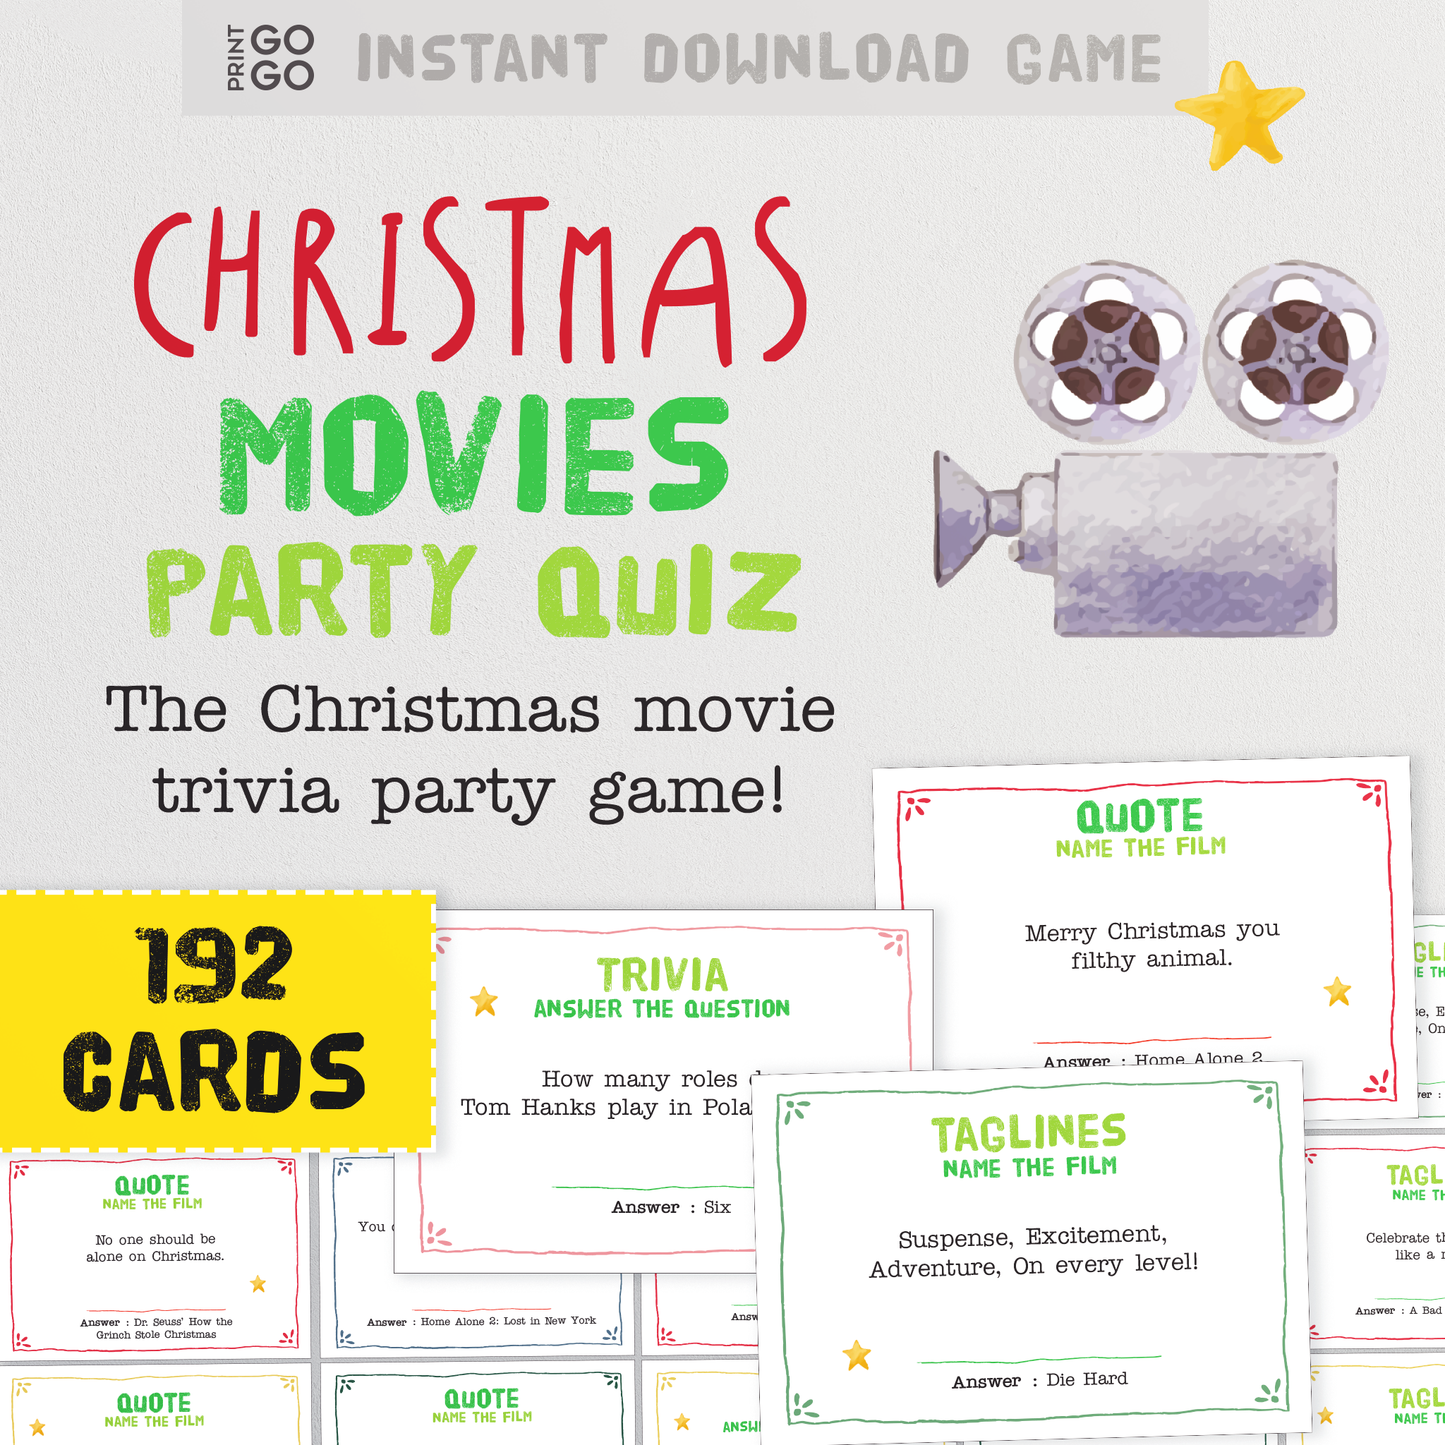 Christmas Movies Party Quiz - The Fun Christmas Movie Trivia Party Game